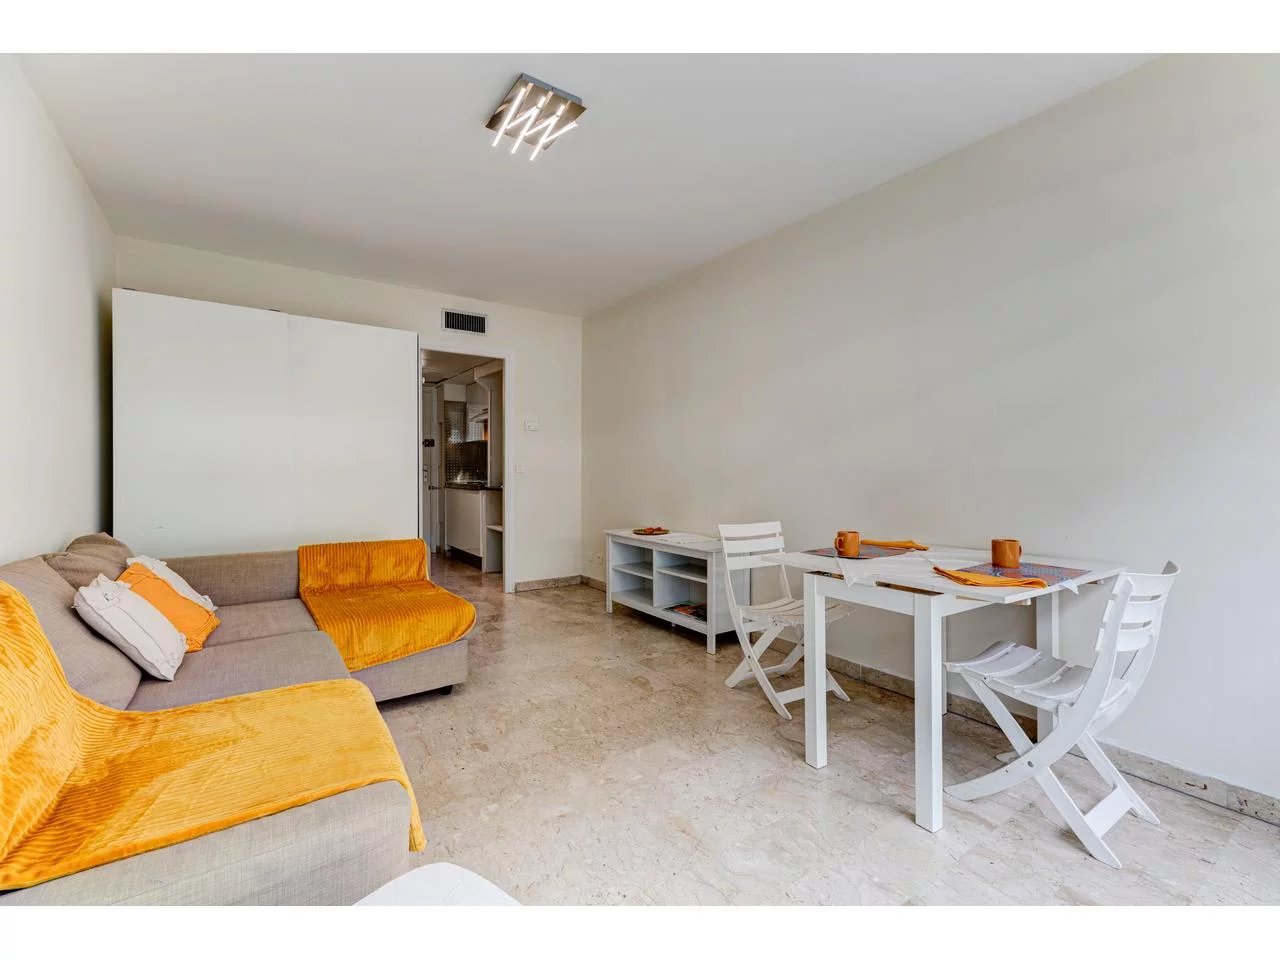 Appartement  1 Locali 24m2  In vendita   220 000 €